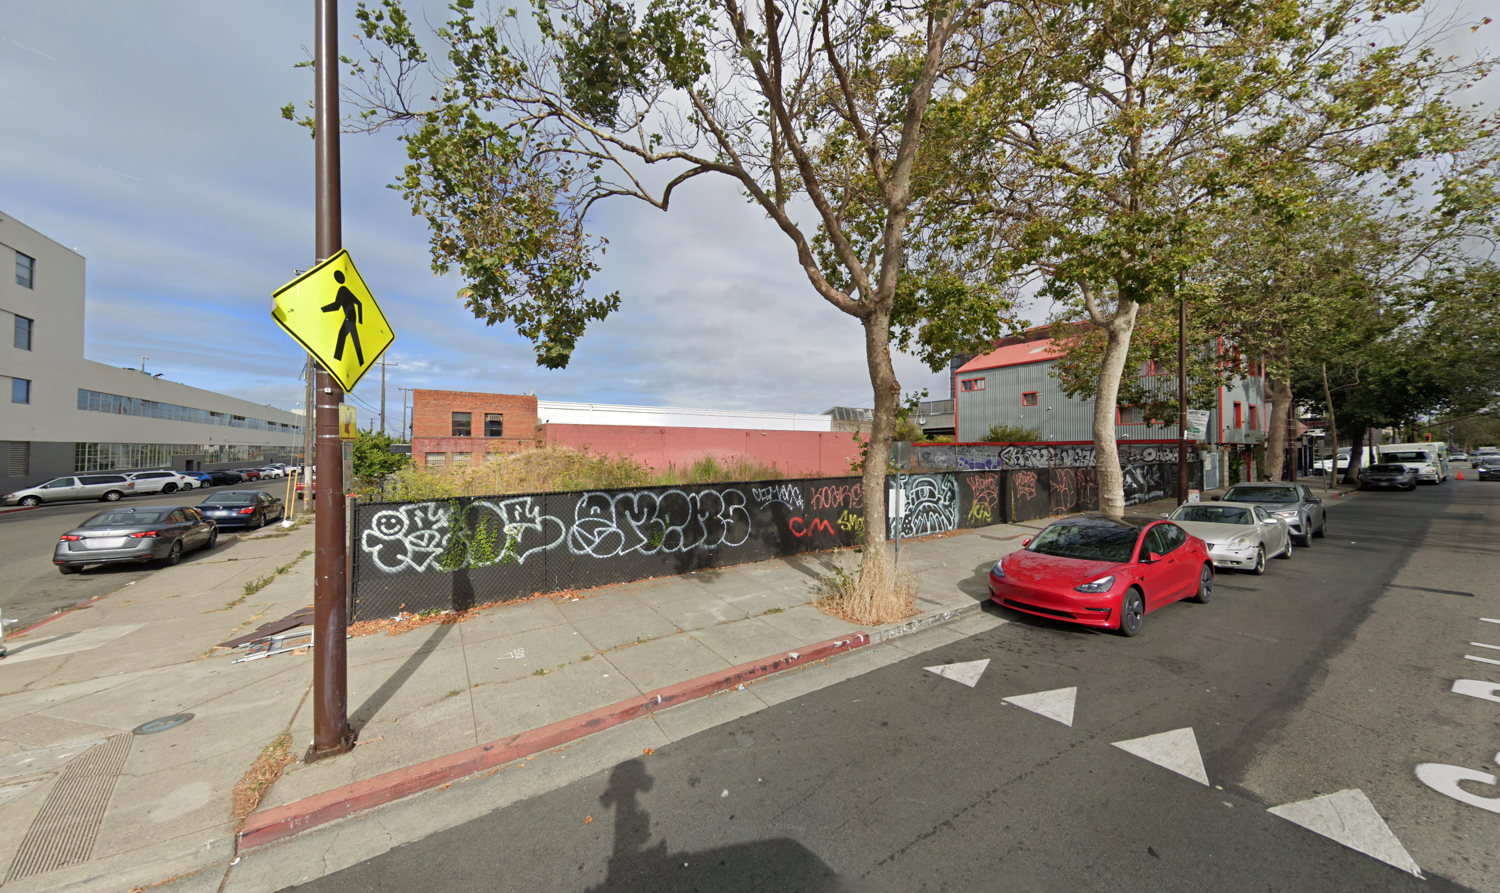 3020 San Pablo Avenue, image via Google Street View